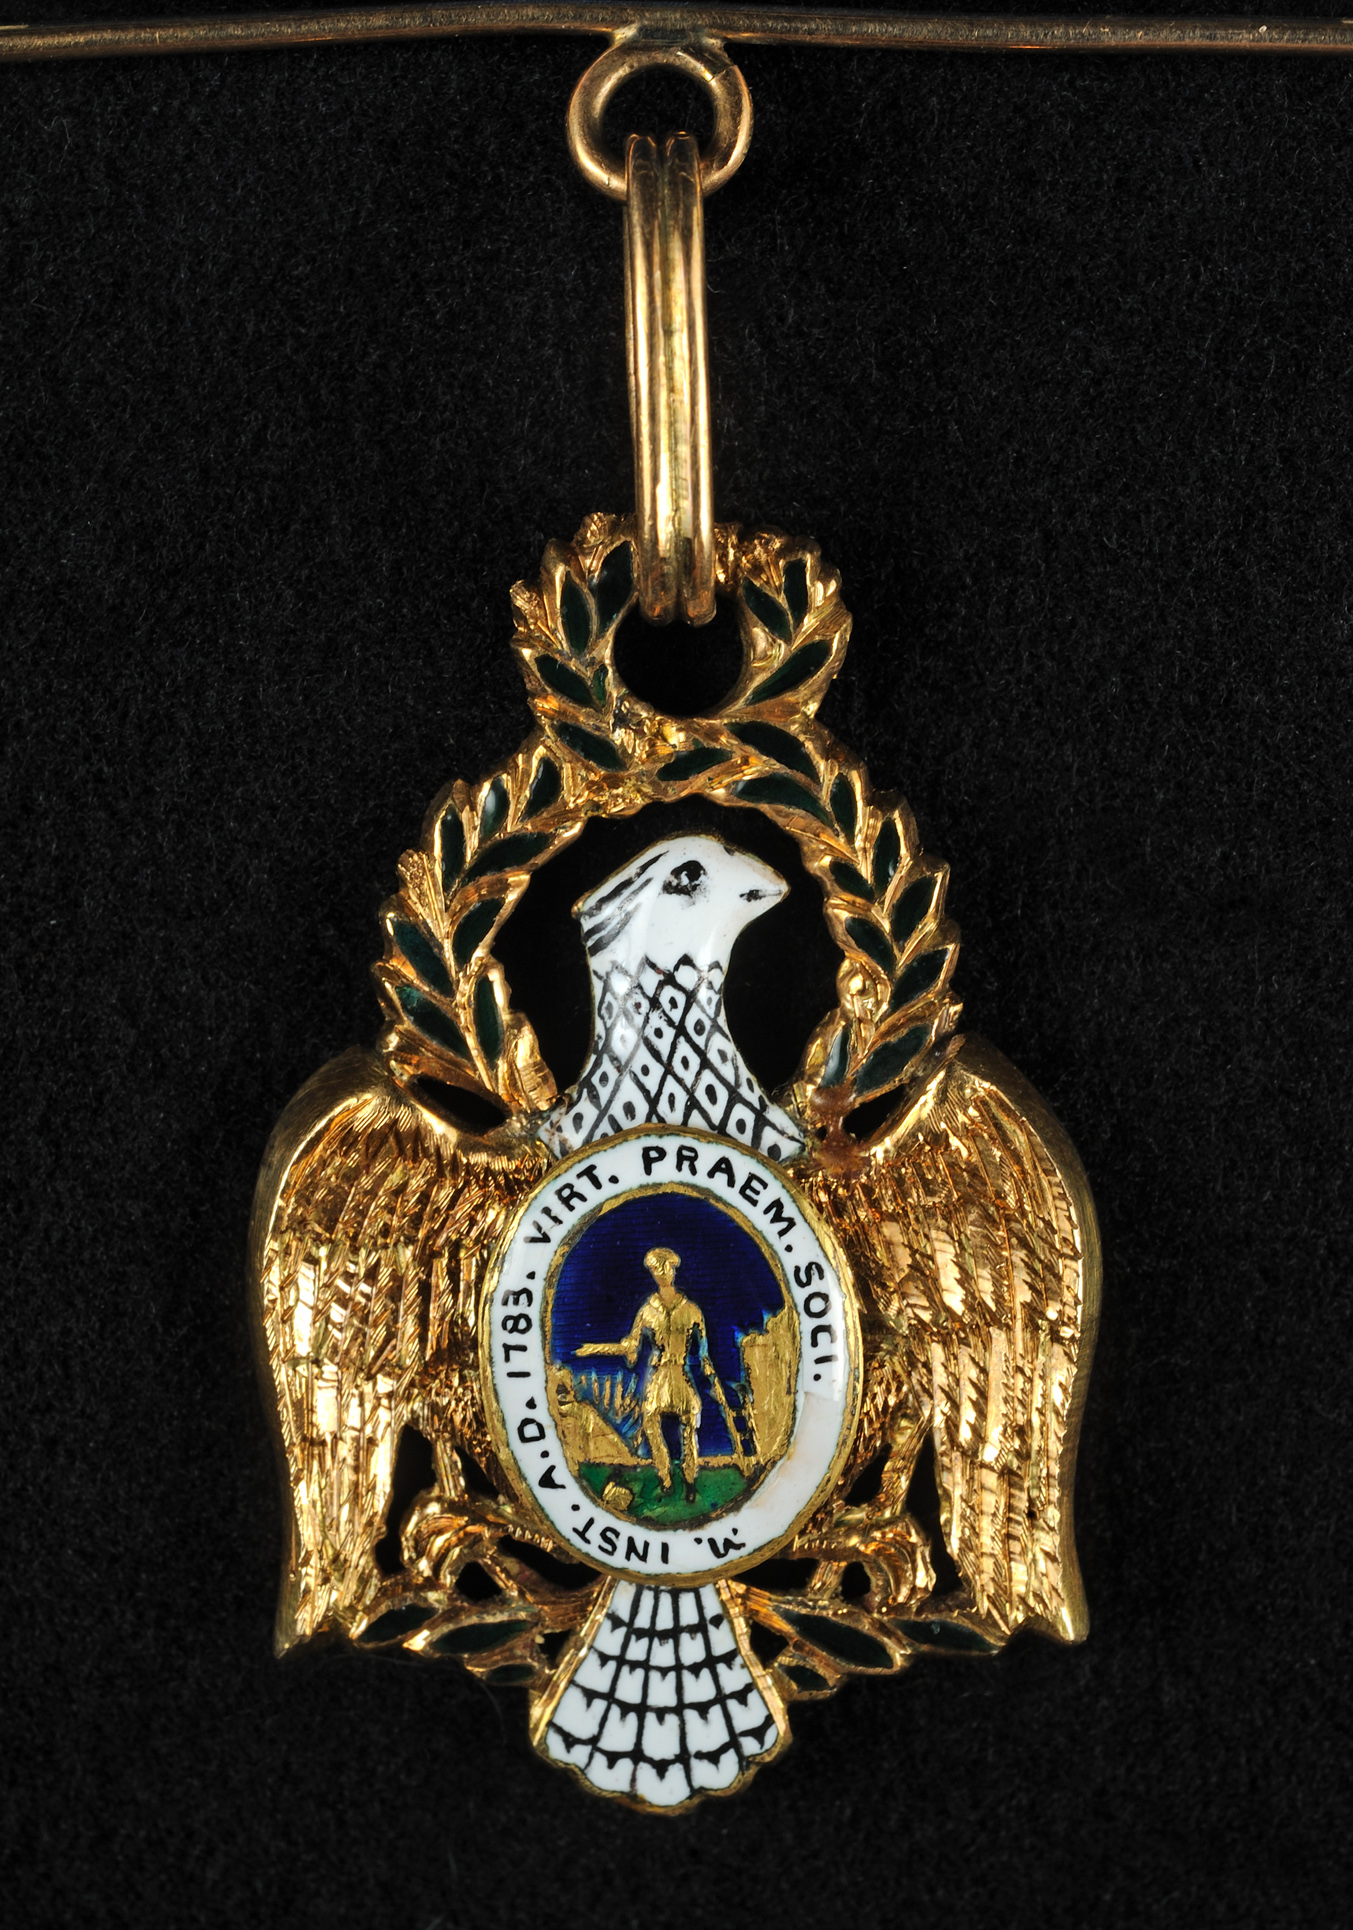 Society of the Cincinnati insignia, ca. 1795-1820